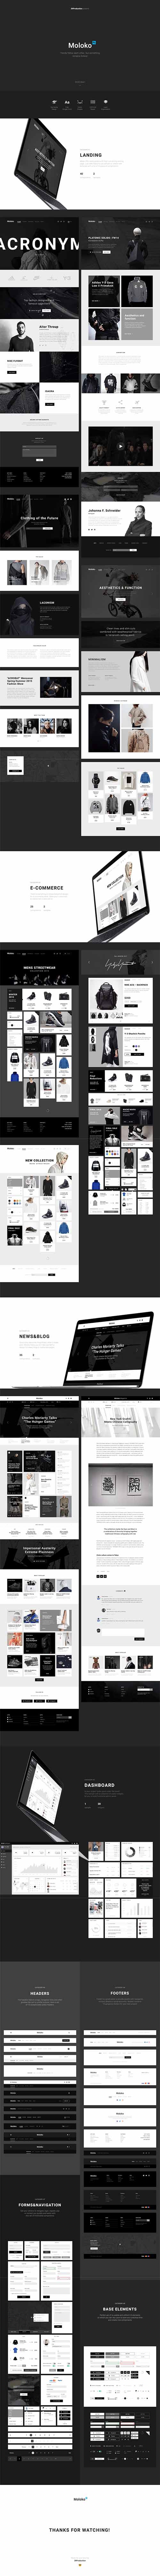 Moloko - Web based modern & minimalistic UI Kit